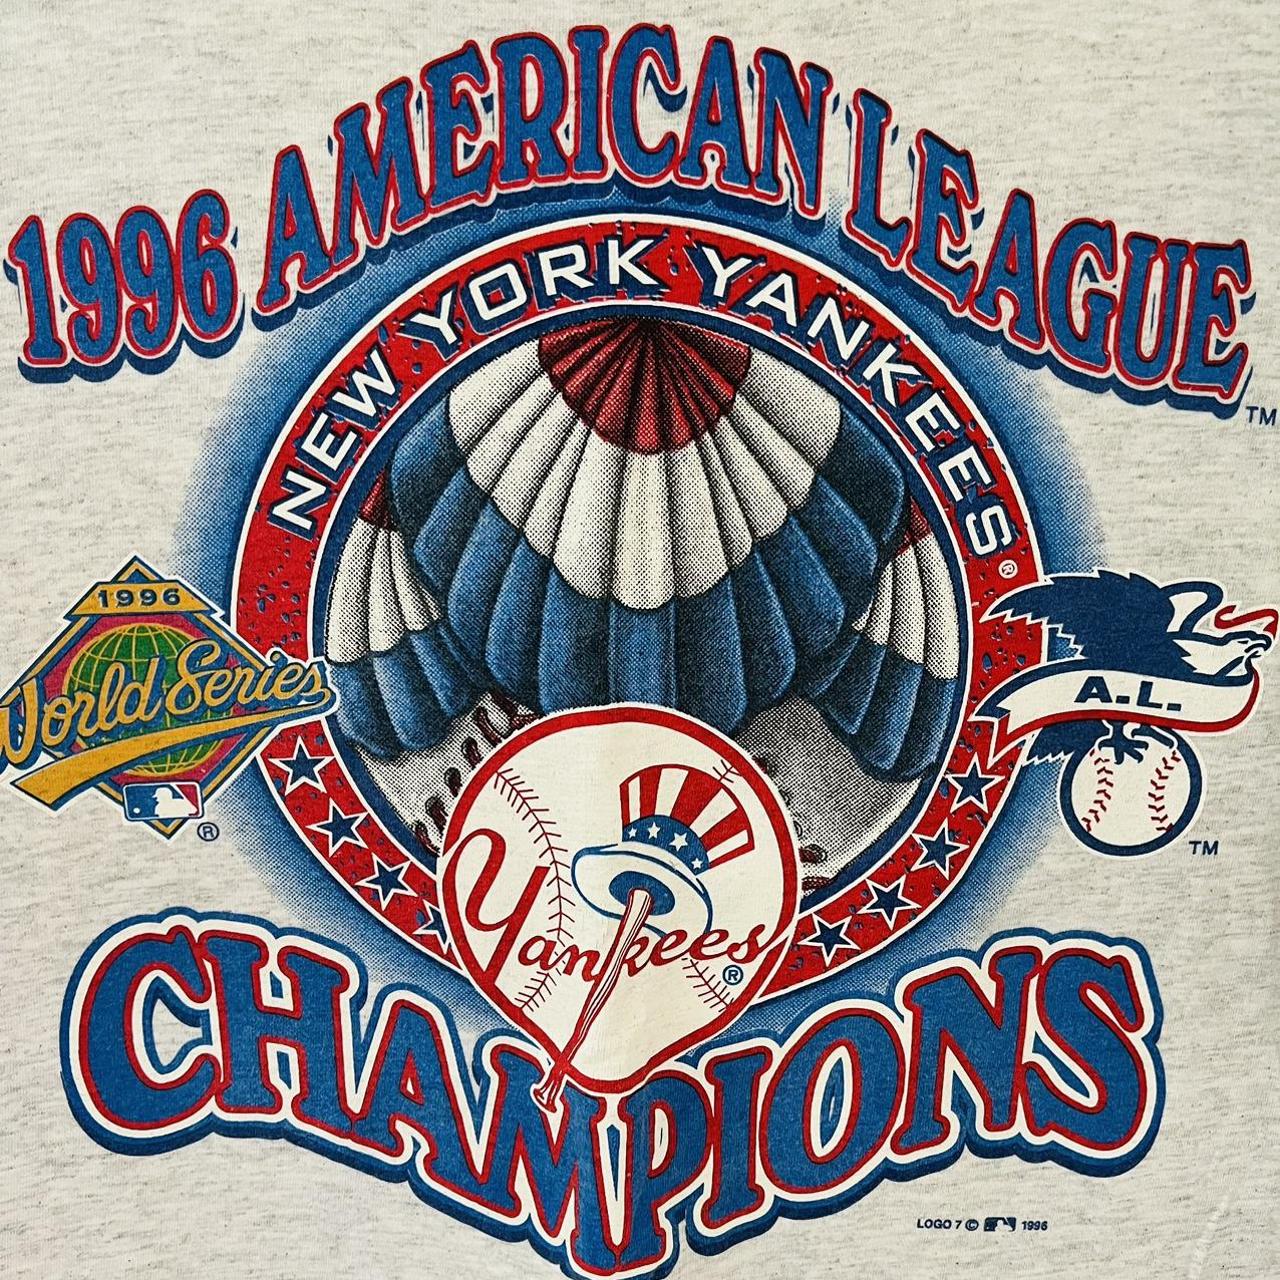 Vintage 90s New York Yankees t-shirt purple Nutmeg - Depop